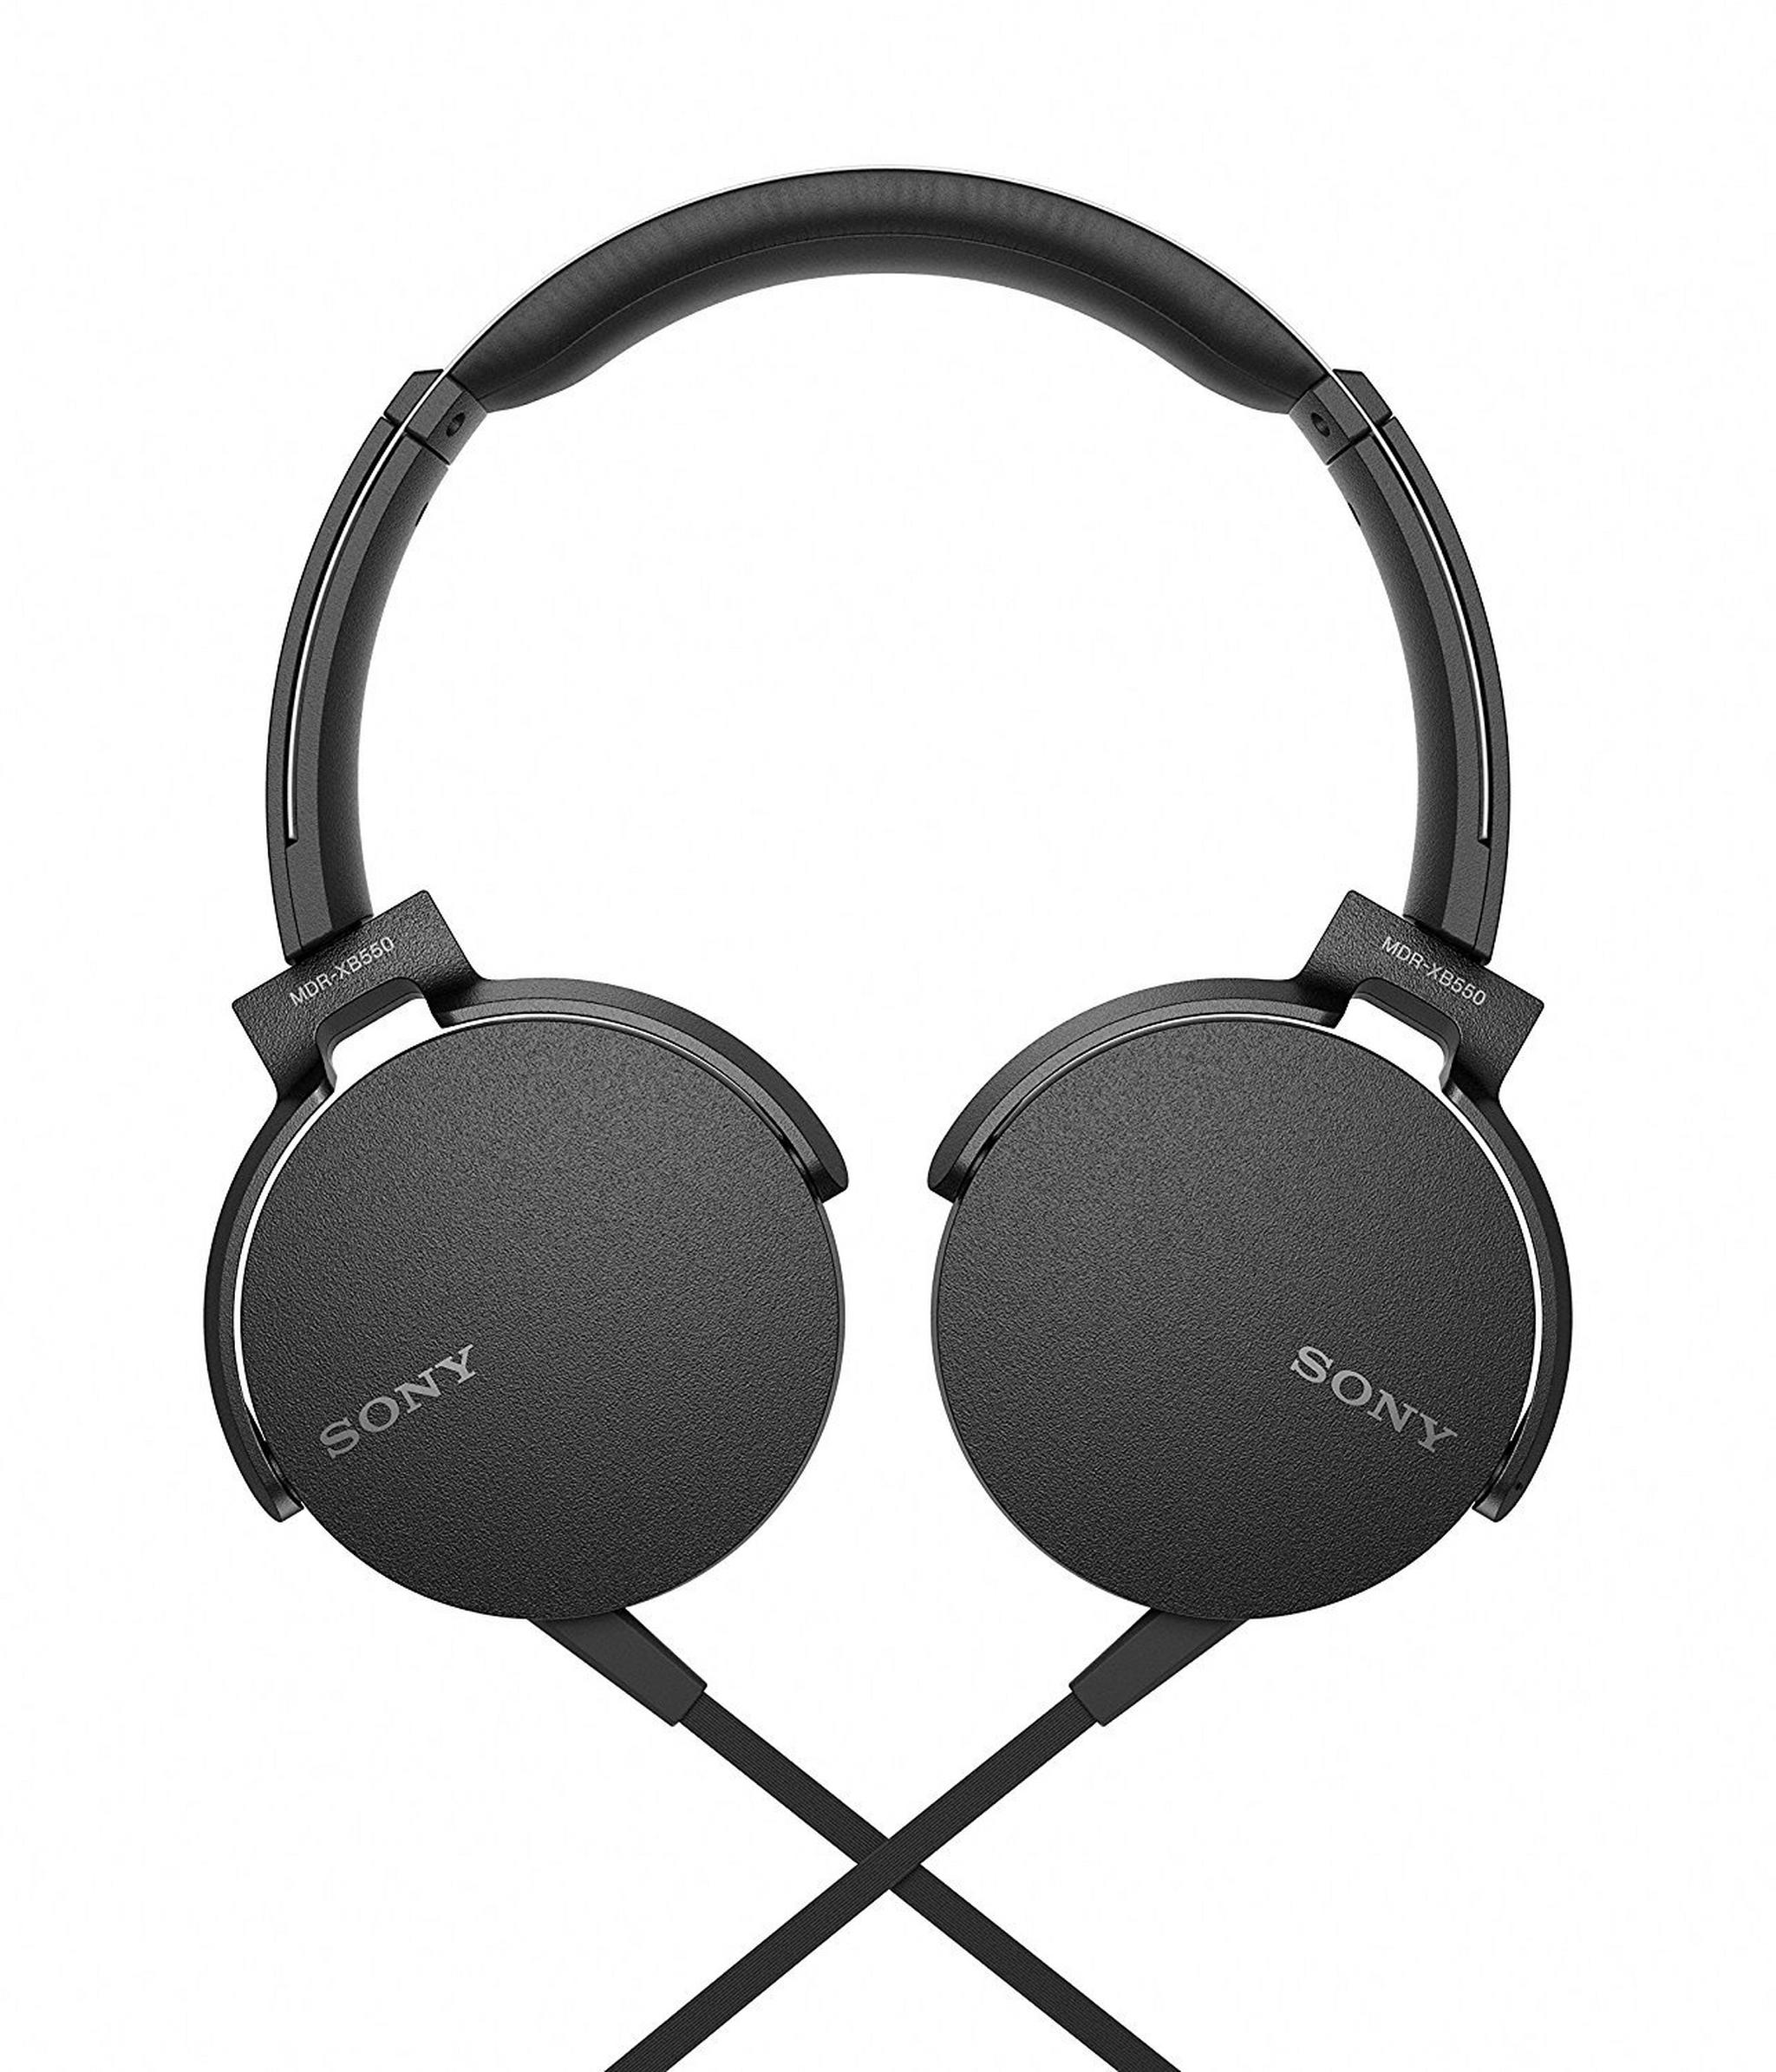 Sony Extra Bass Headphone (MDR-XB550AP) - Black